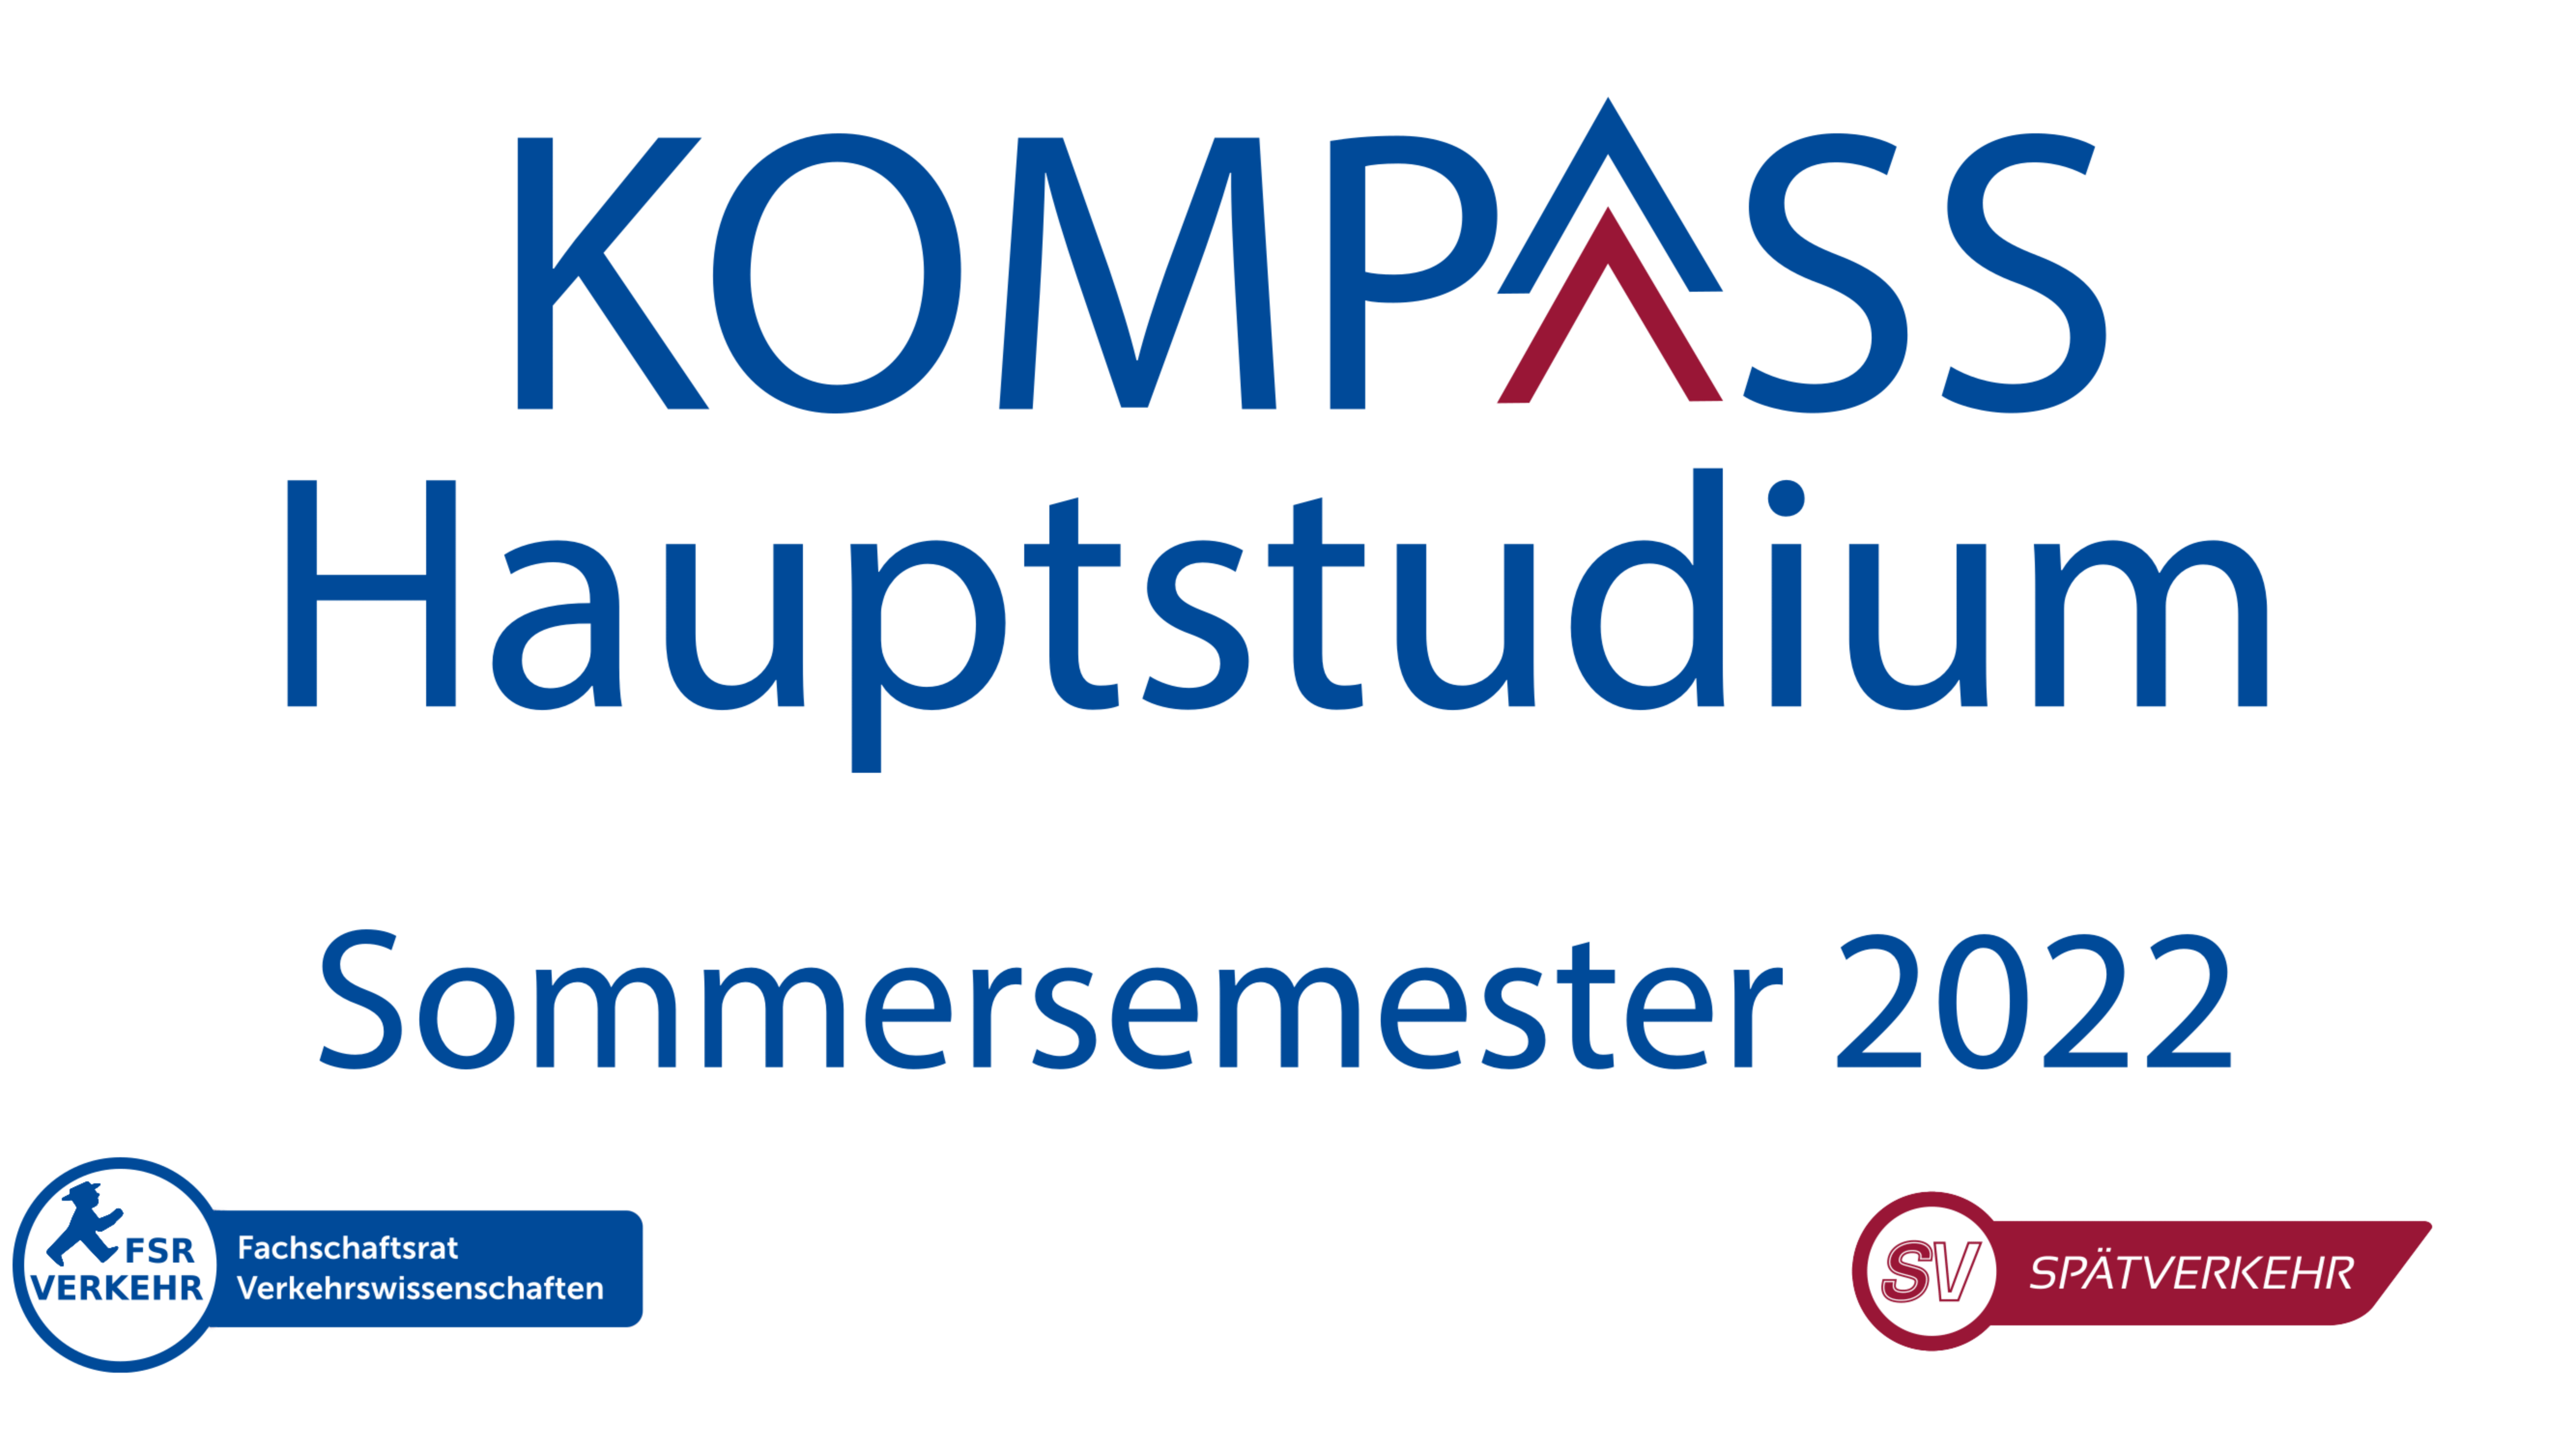 Kompass Hauptstudium – Prospects after graduation